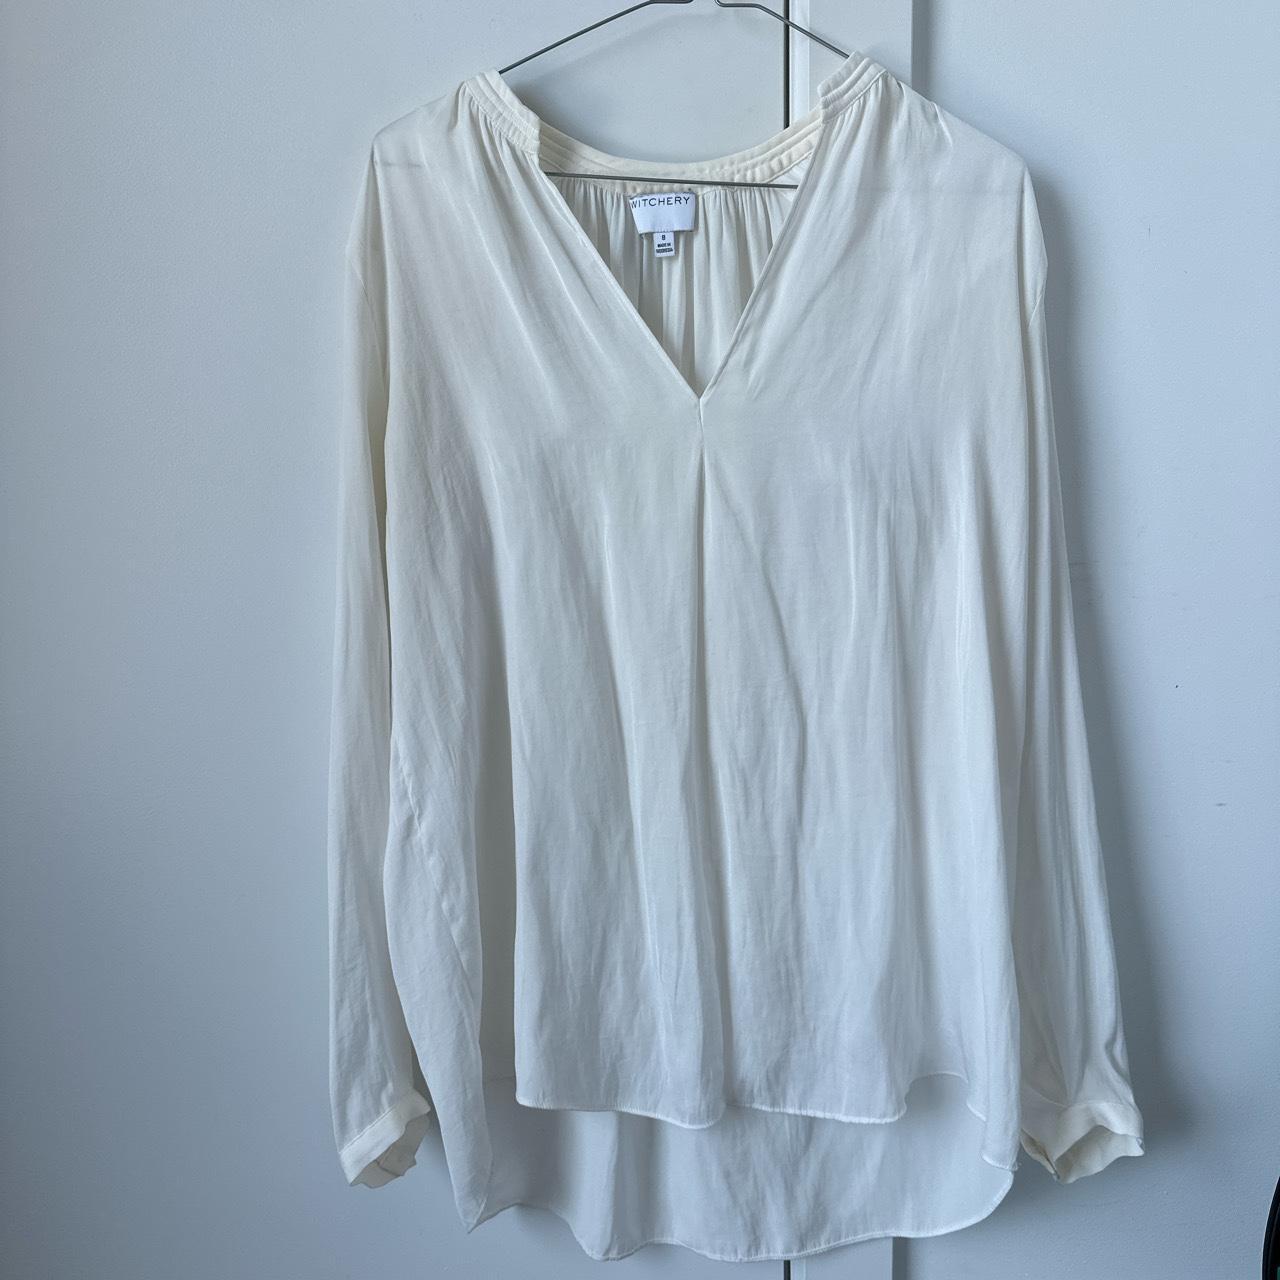 White blouse - Depop